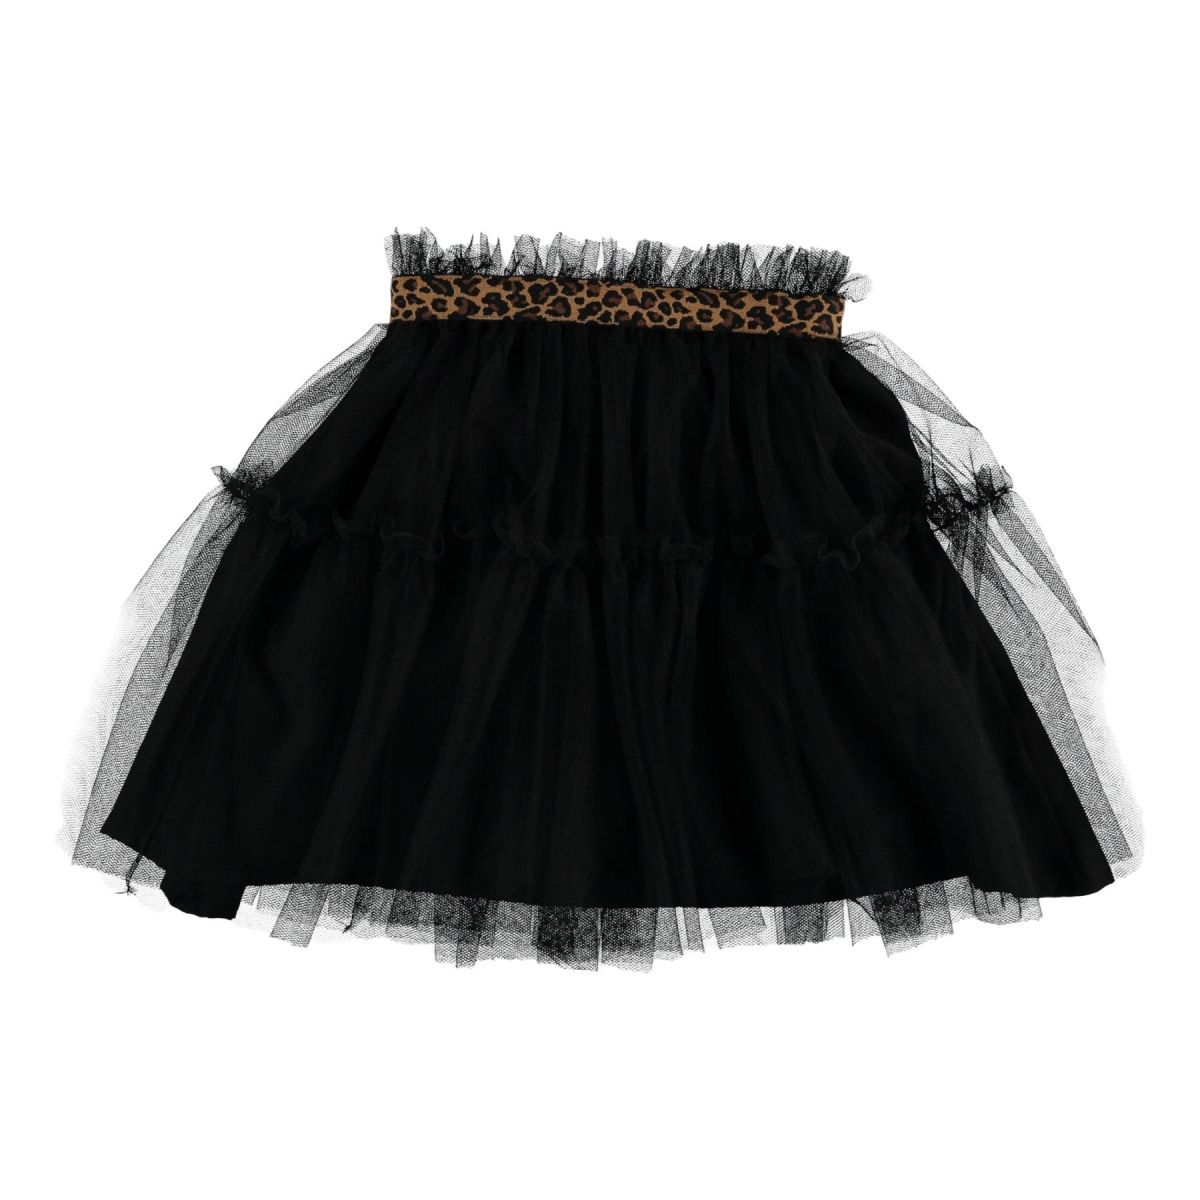 Tocoto Vintage Tulle skirt with animal print Black W30820BLACK 